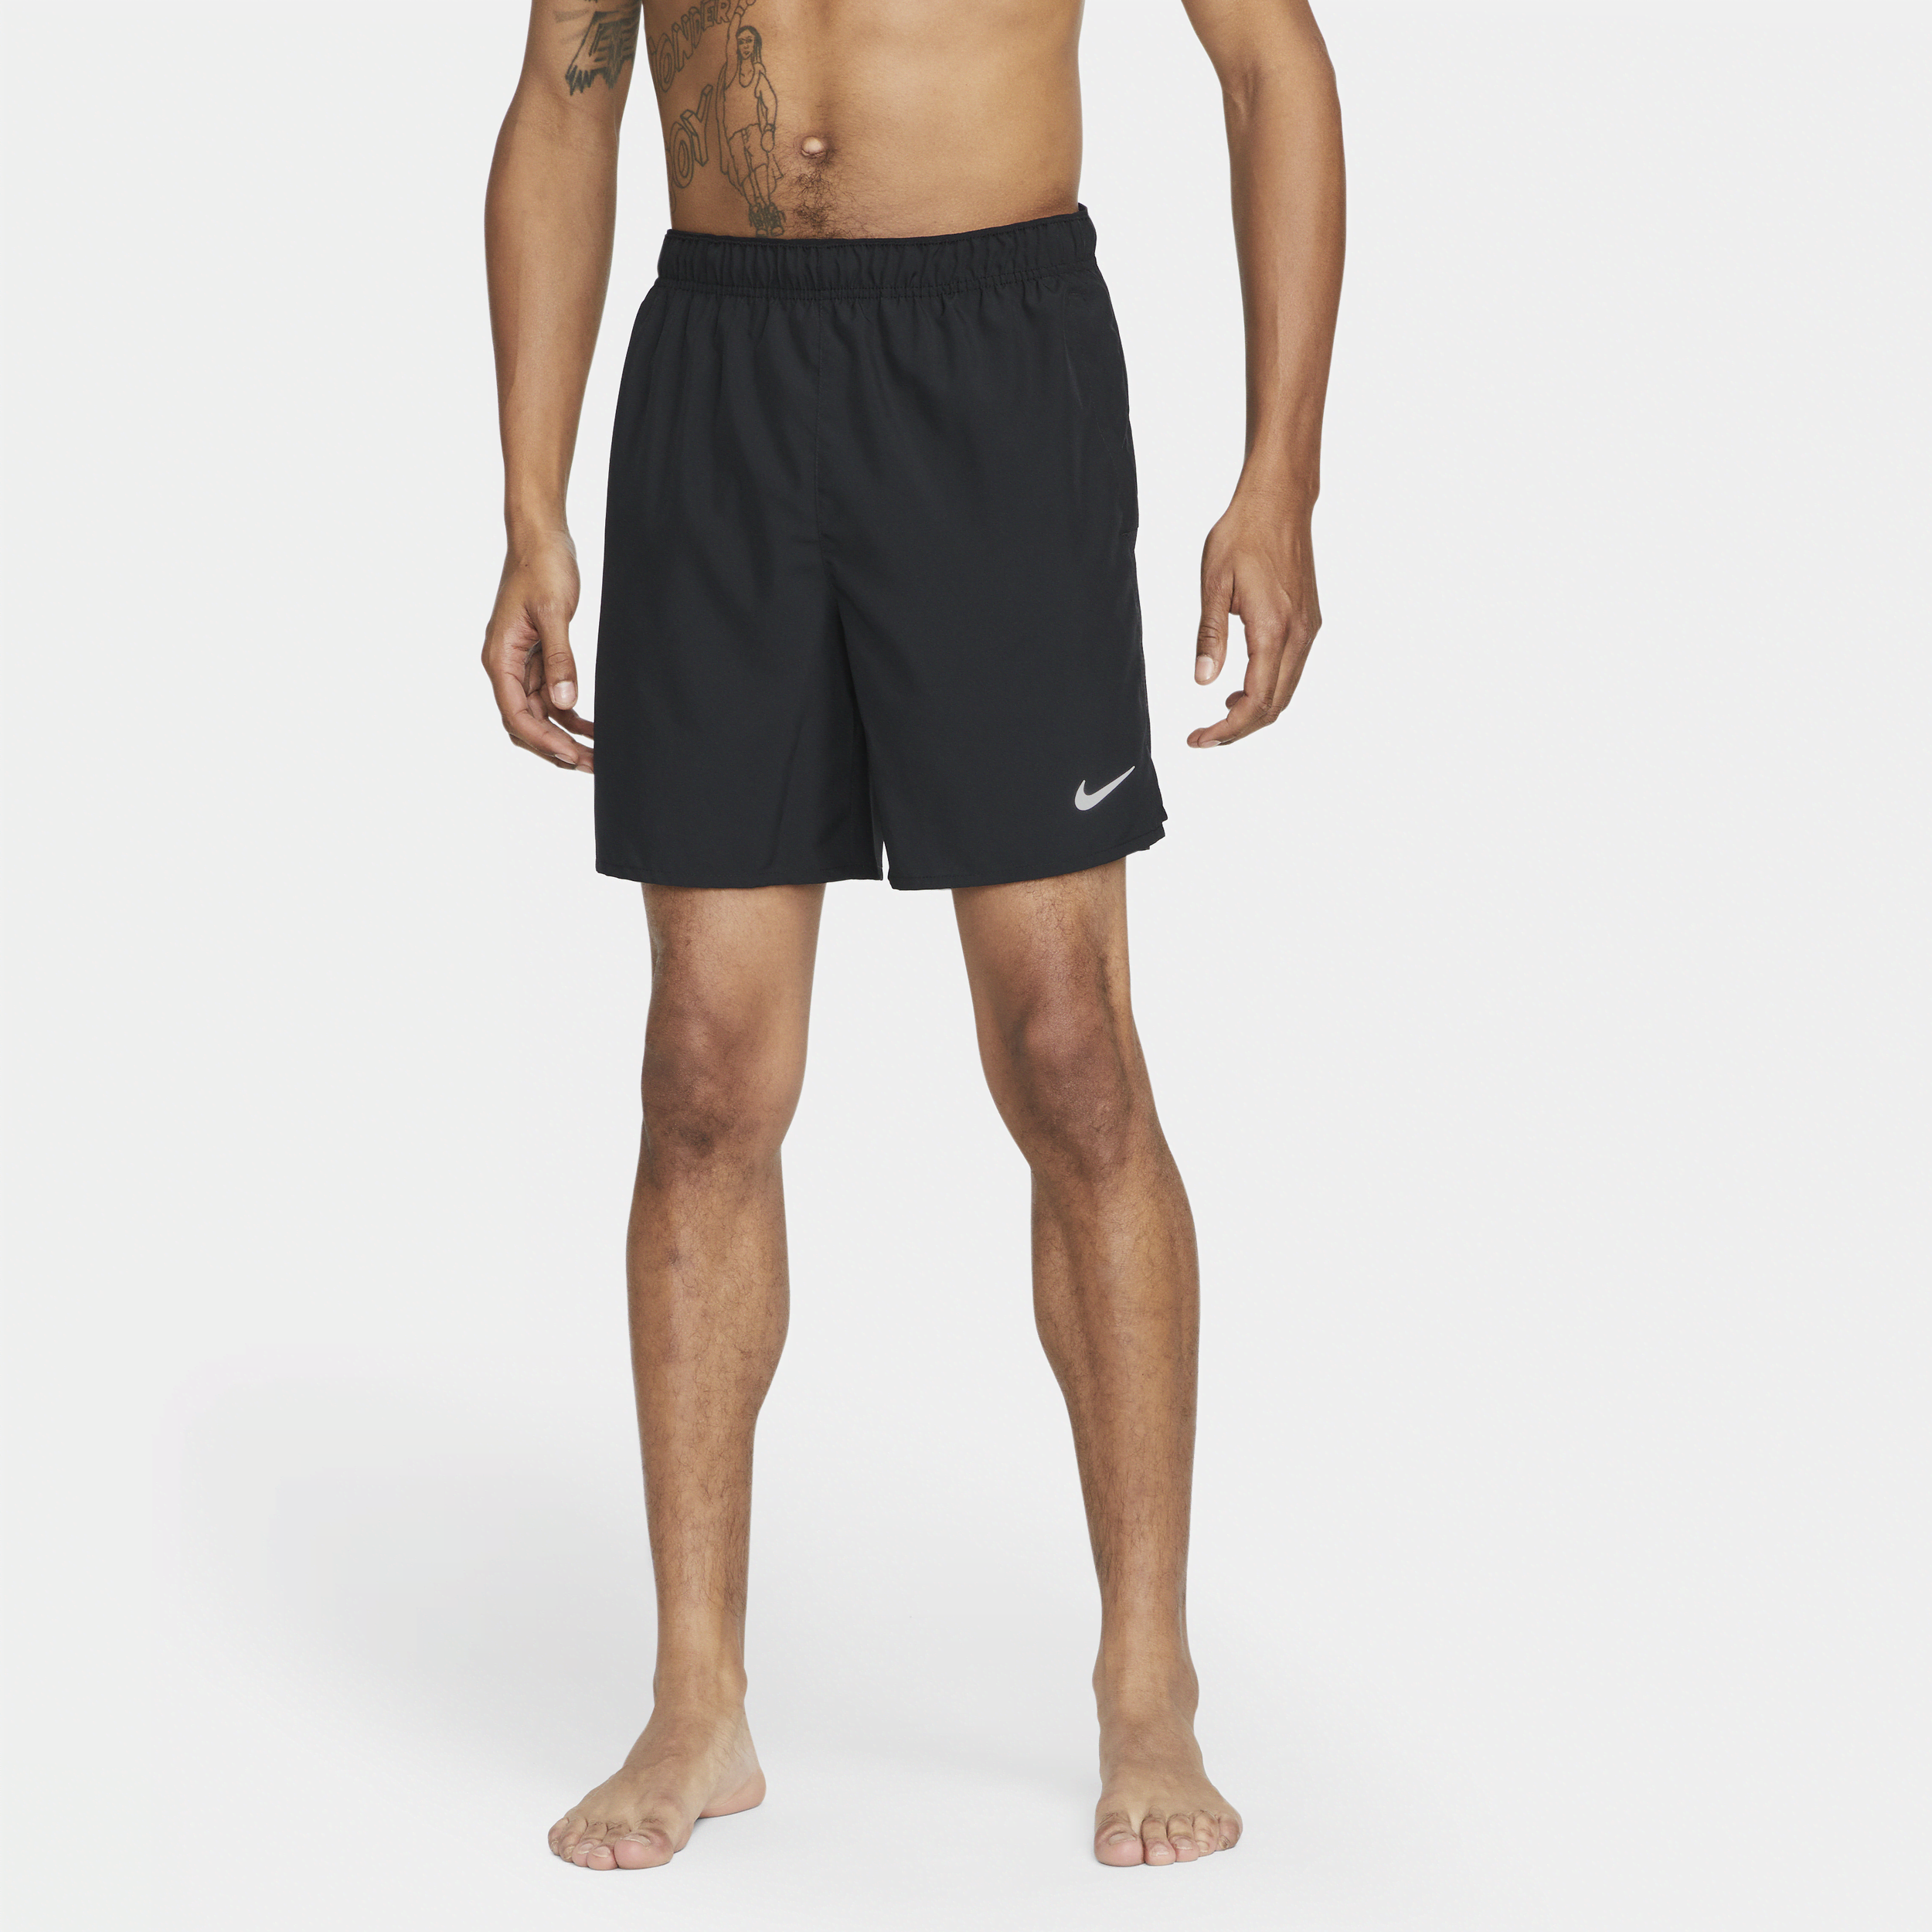 Shorts da running Dri-FIT non foderati 18 cm Nike Challenger – Uomo - Nero